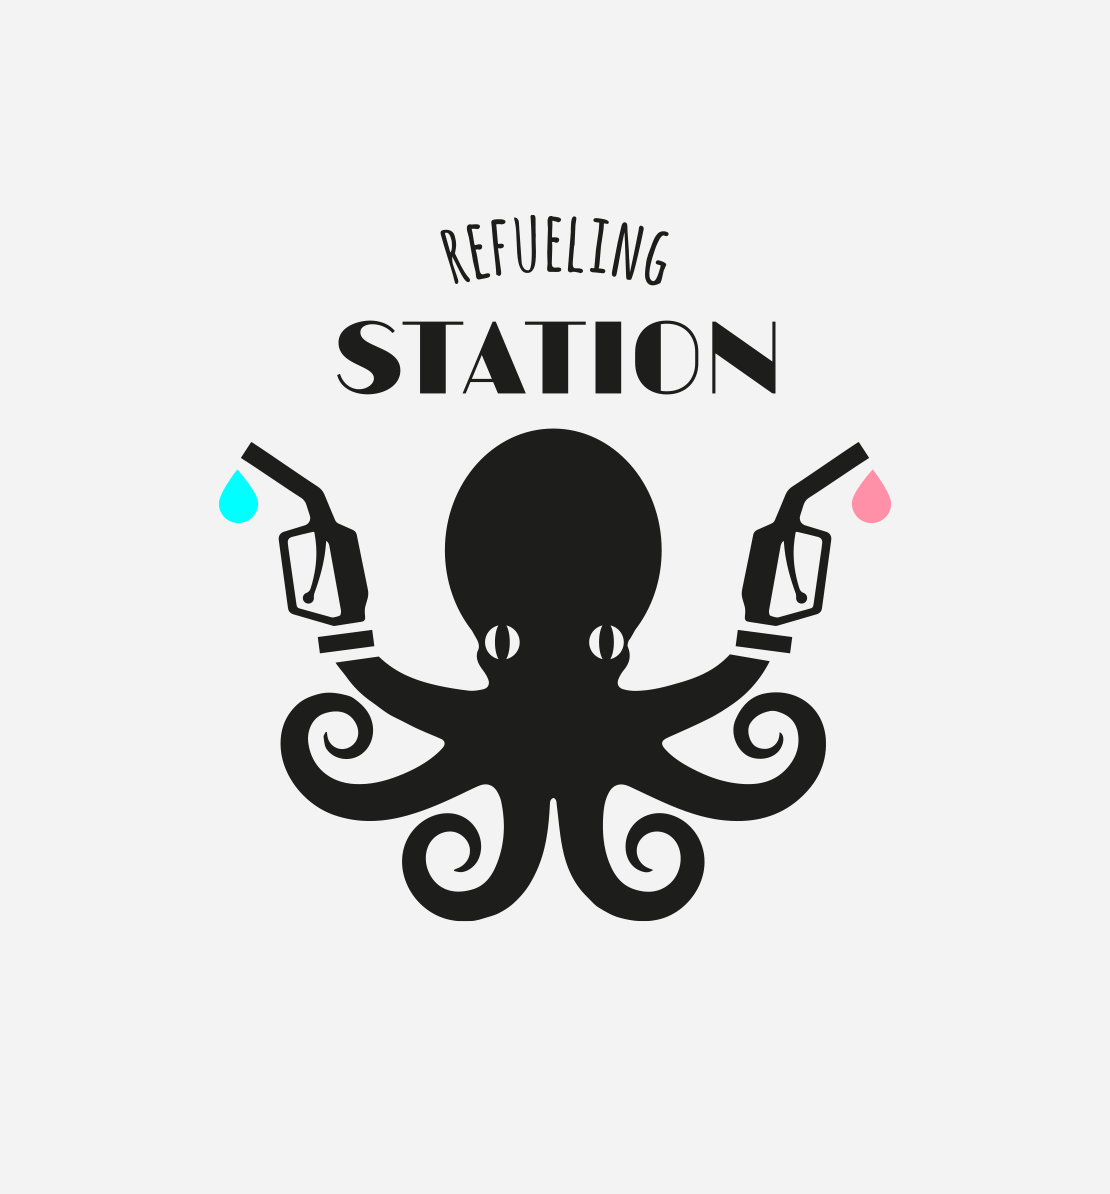  Création du logo Refueling Station